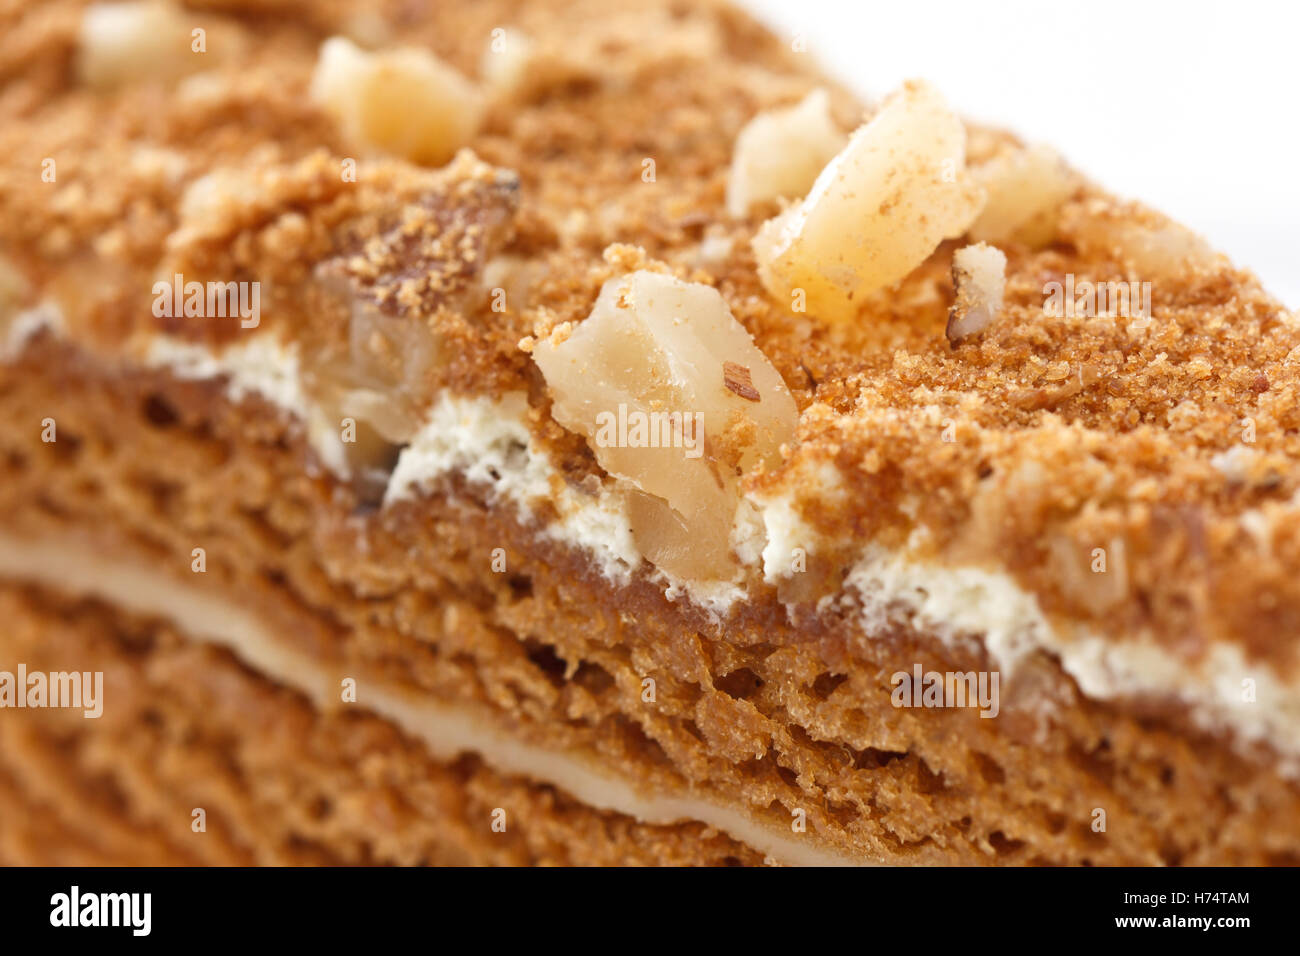 Slice of layered honey cake. Stock Photo